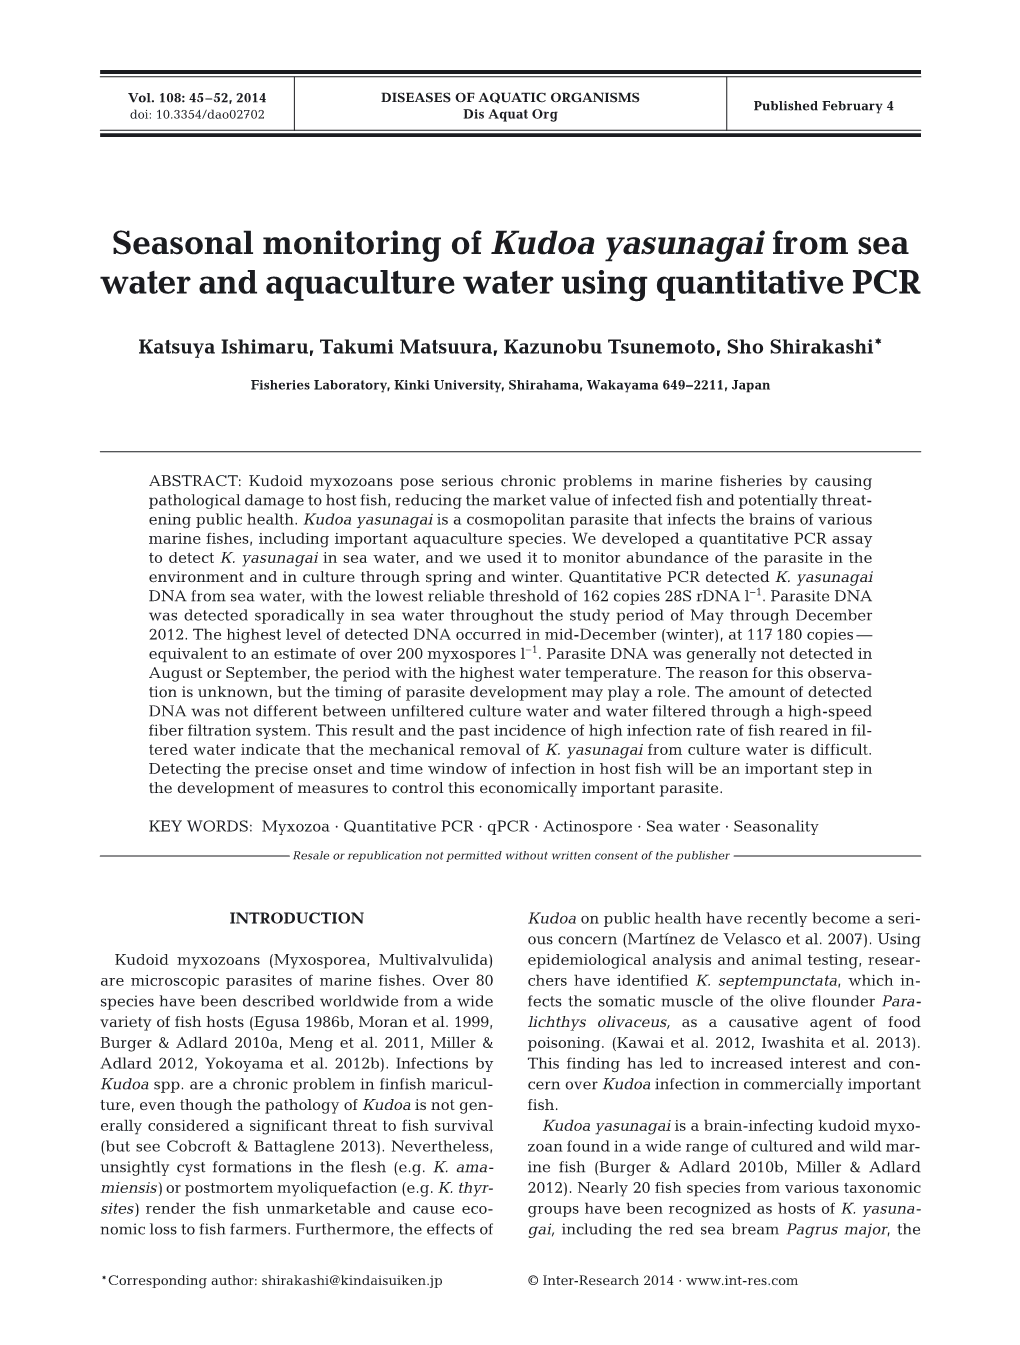 Seasonal Monitoring of Kudoa Yasunagai from Sea Water and Aquaculture Water Using Quantitative PCR